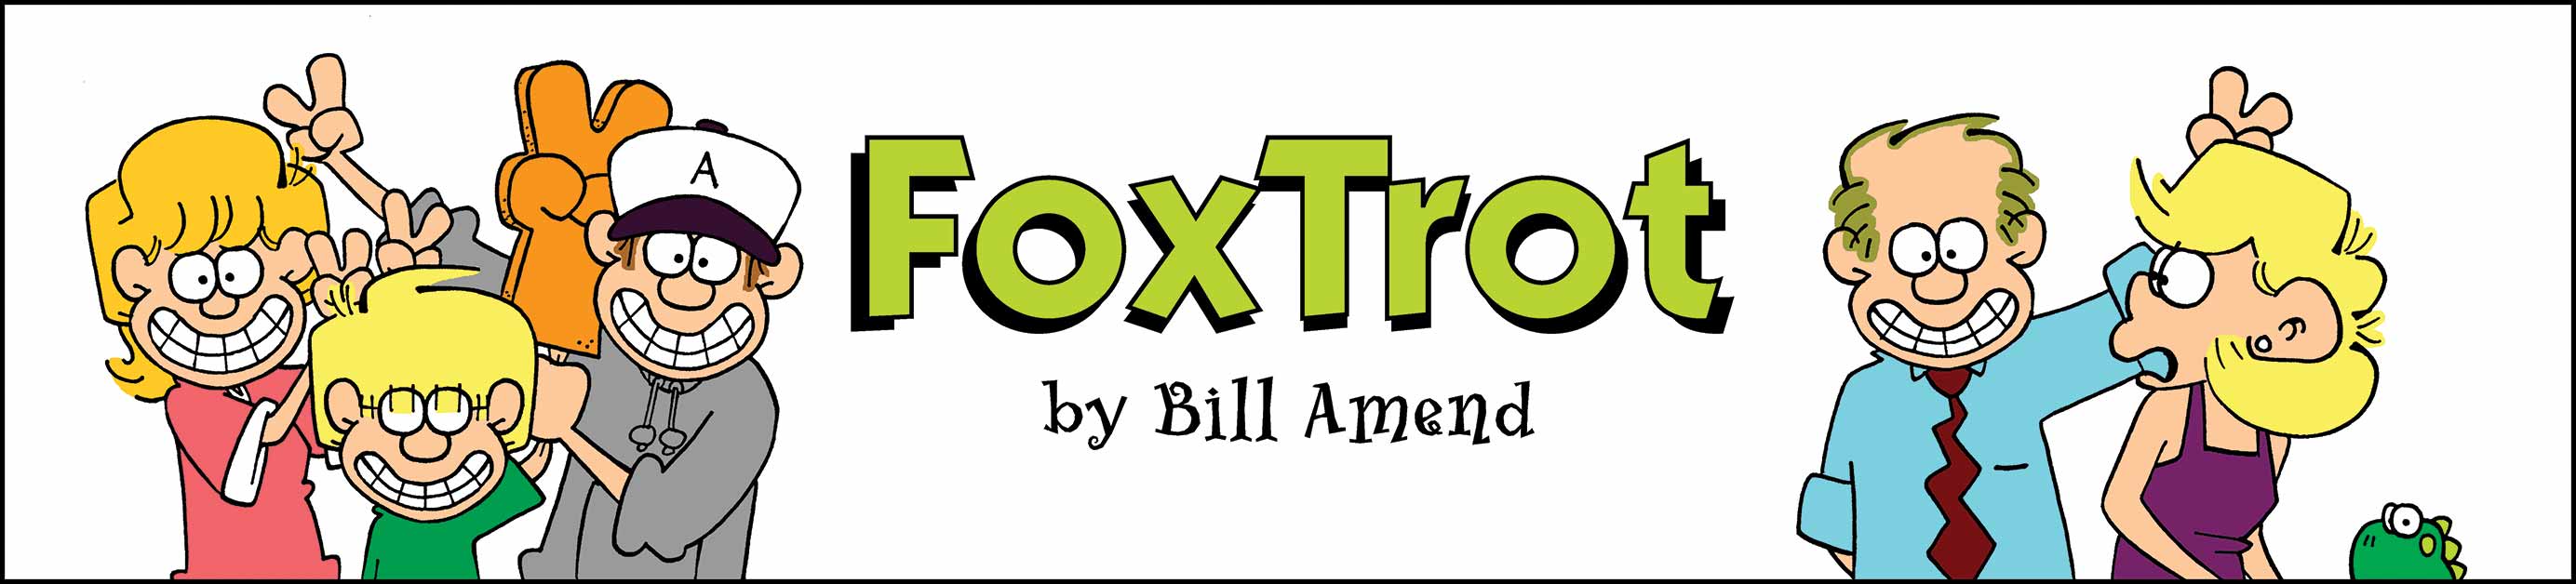 (c) Foxtrot.com